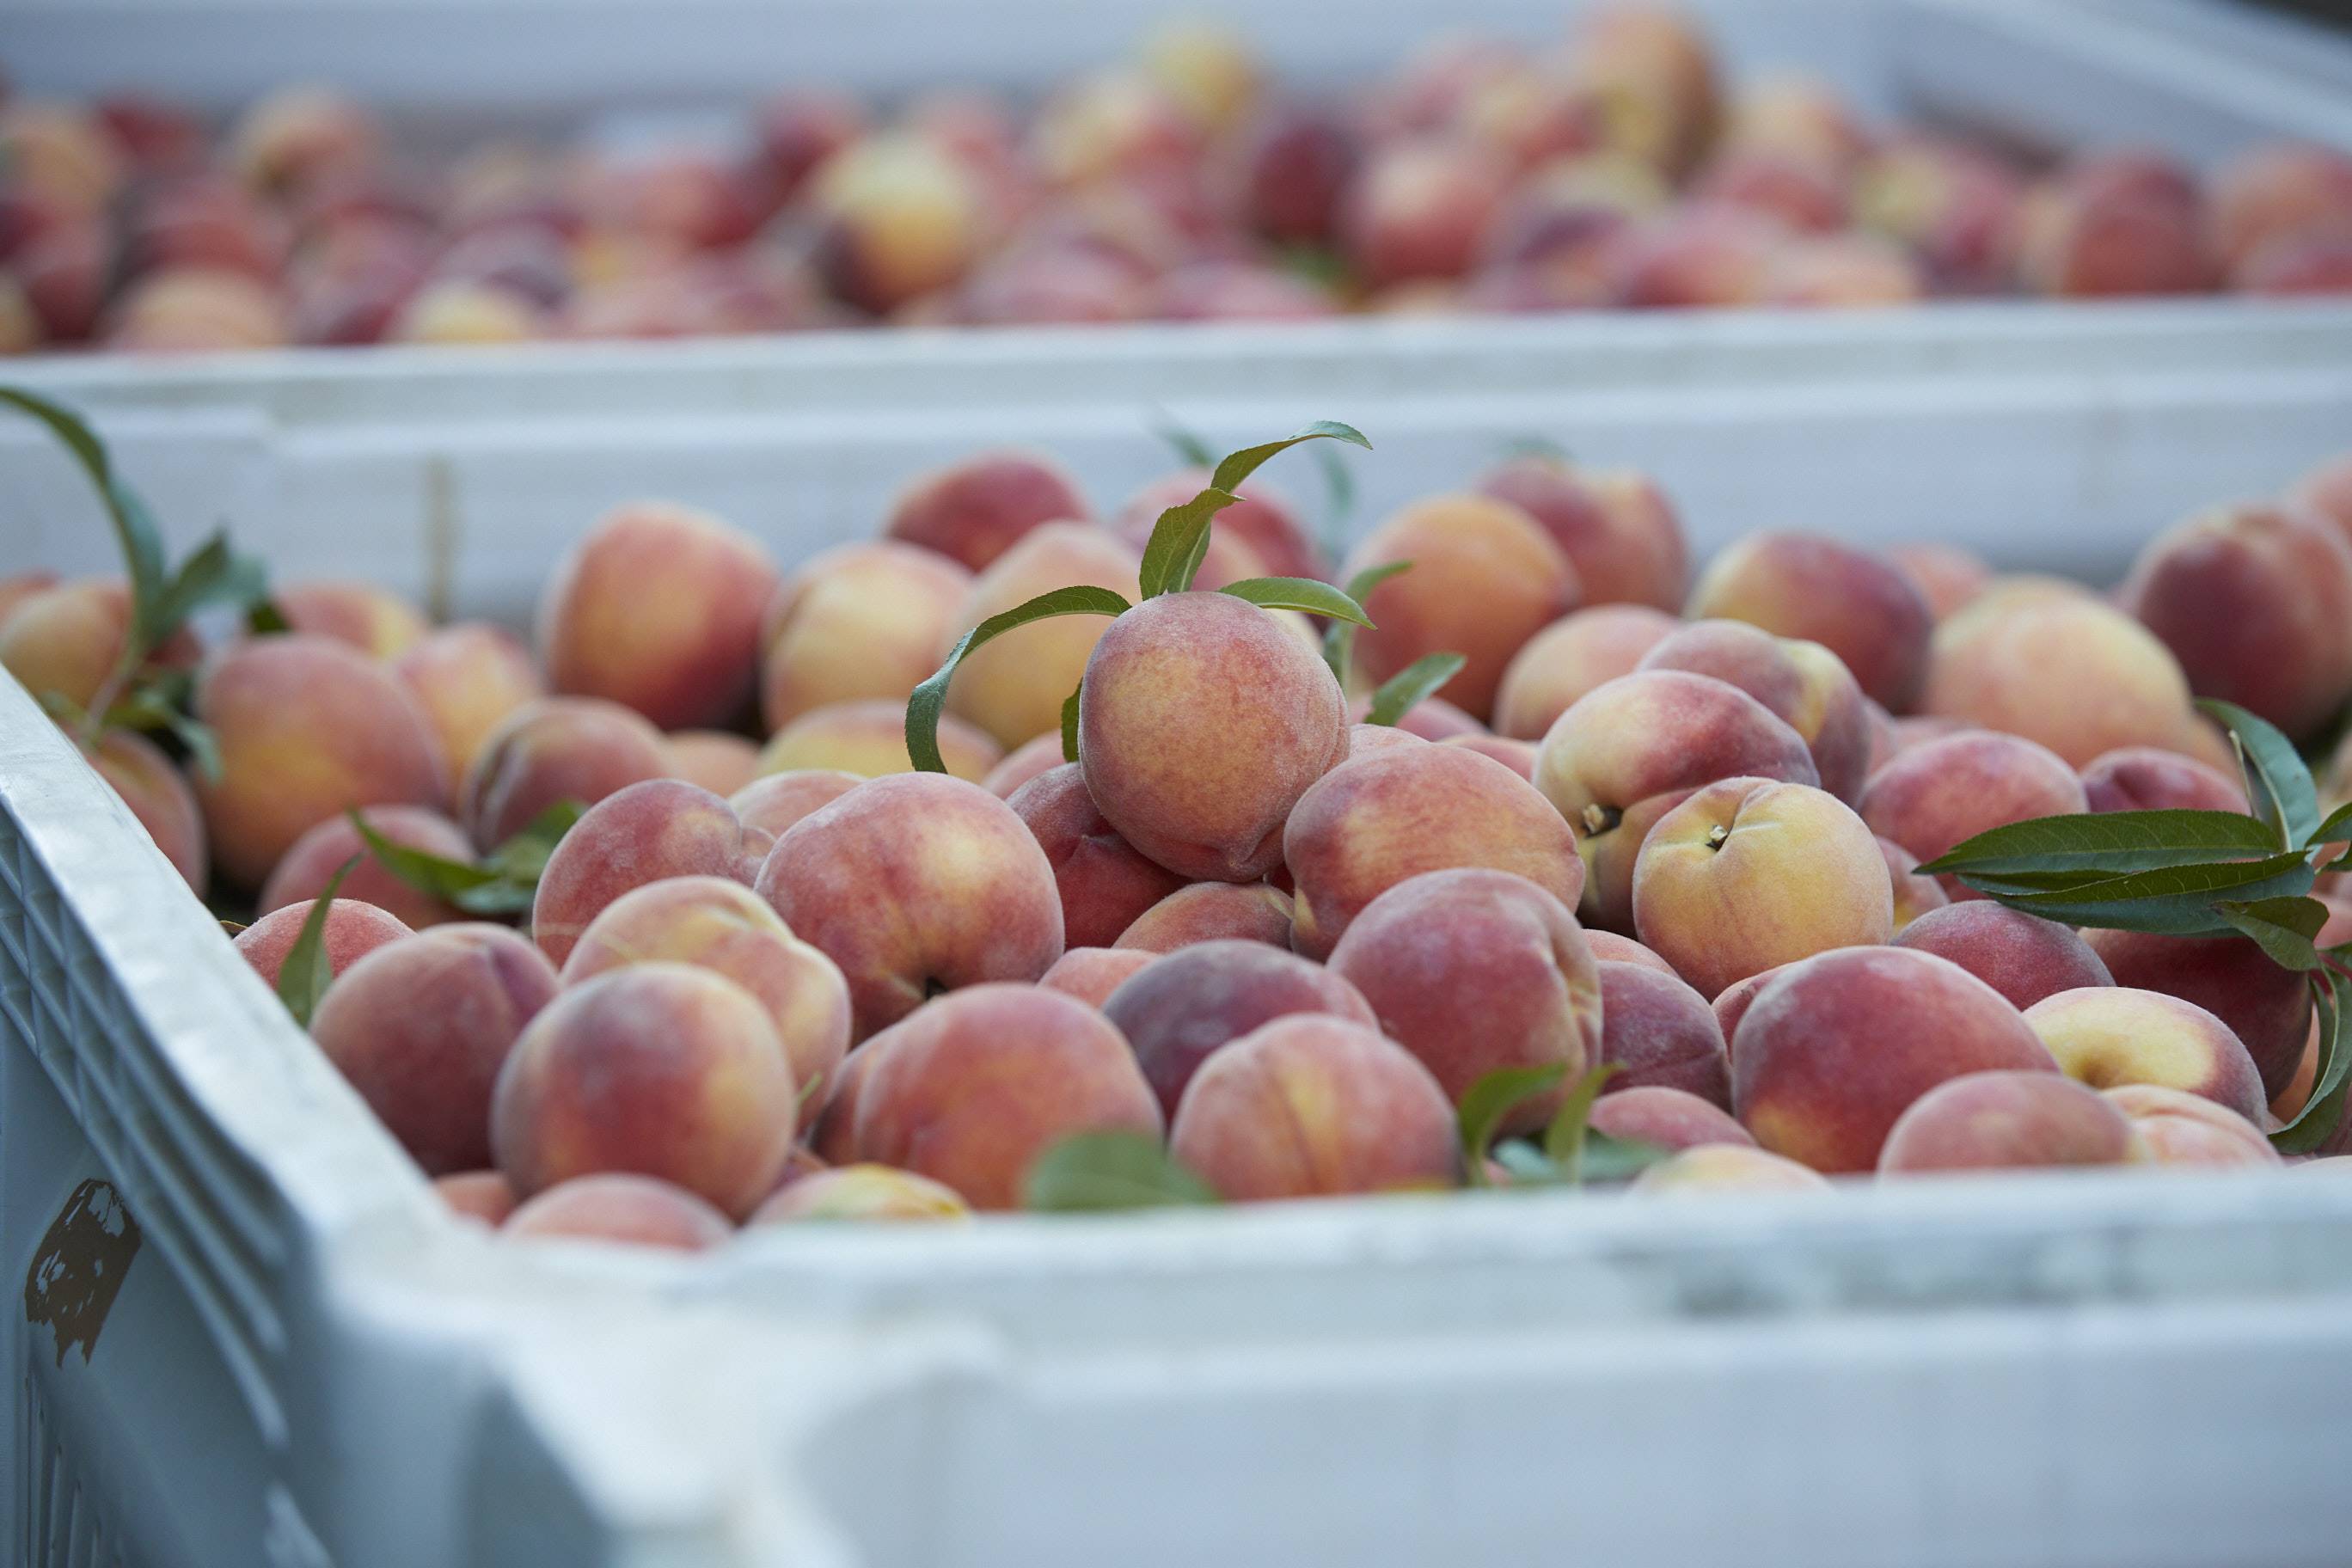 peaches ready for sale in bin